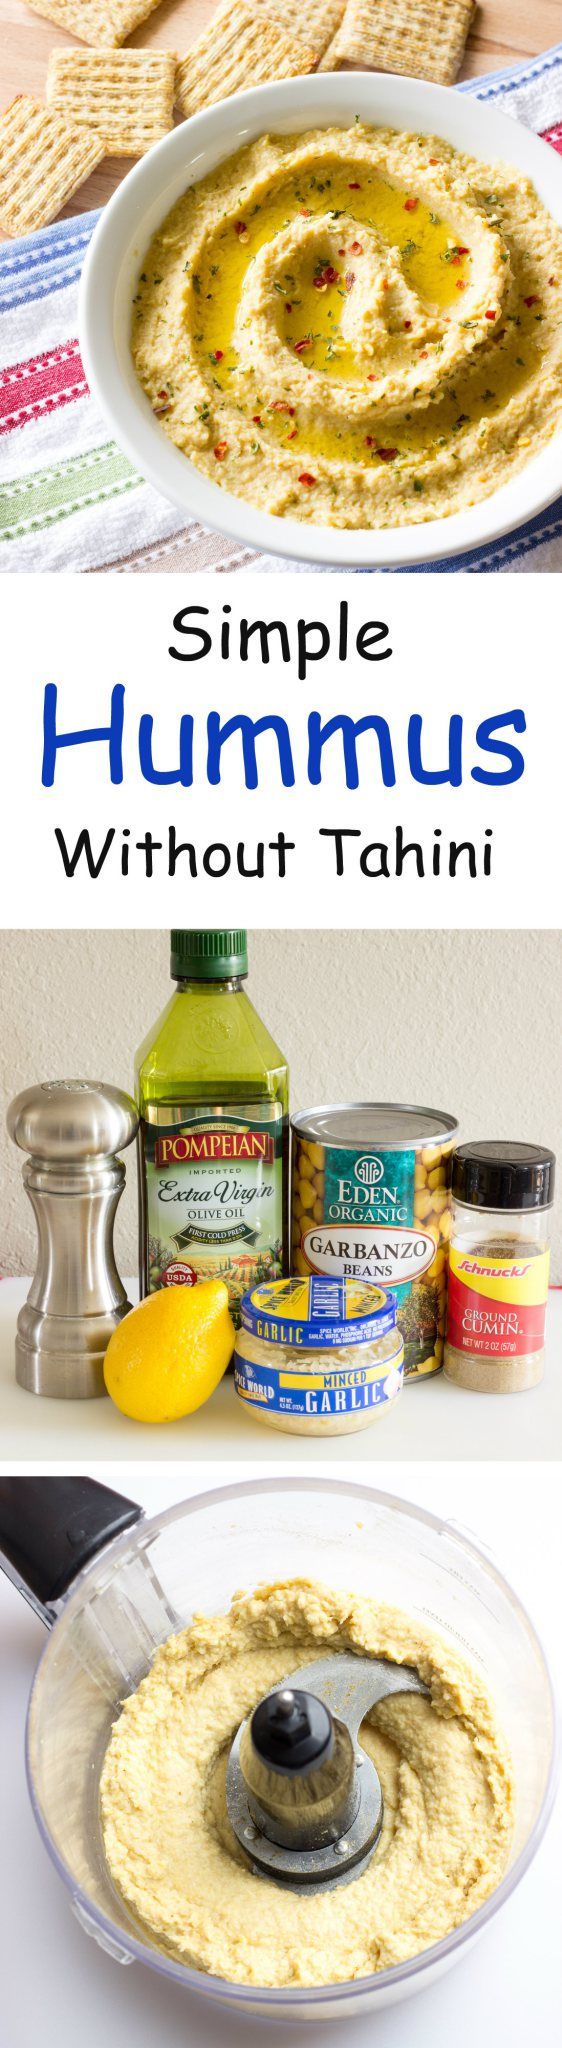 Simple Hummus Without Tahini